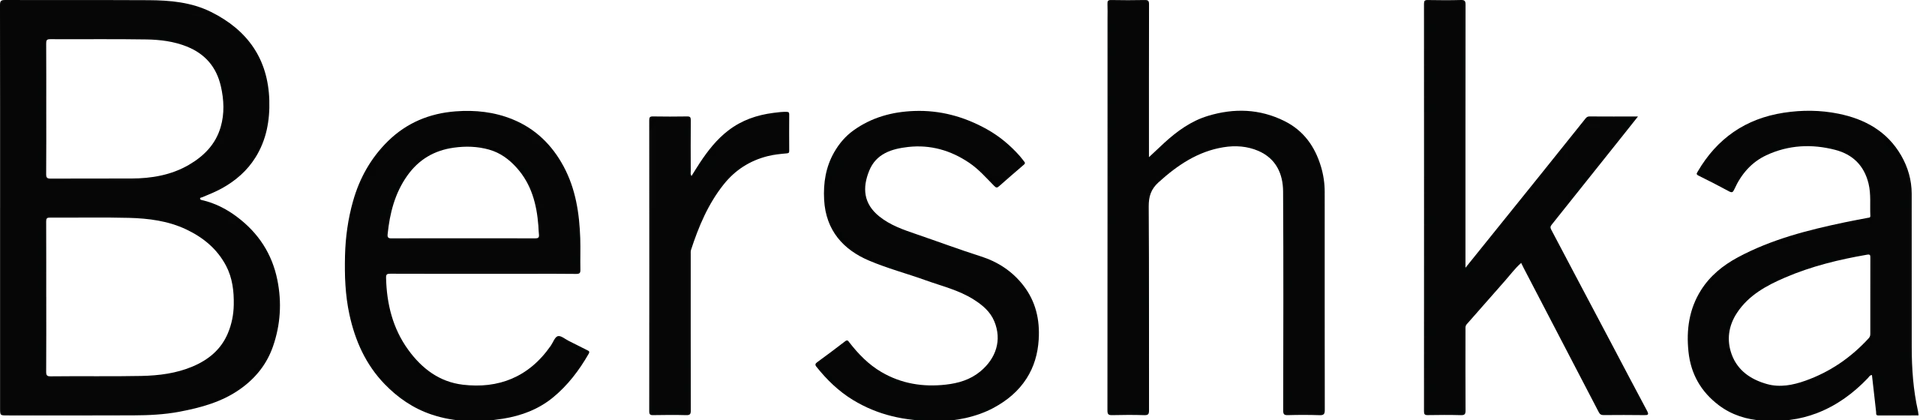 BERSHKA logo of current flyer